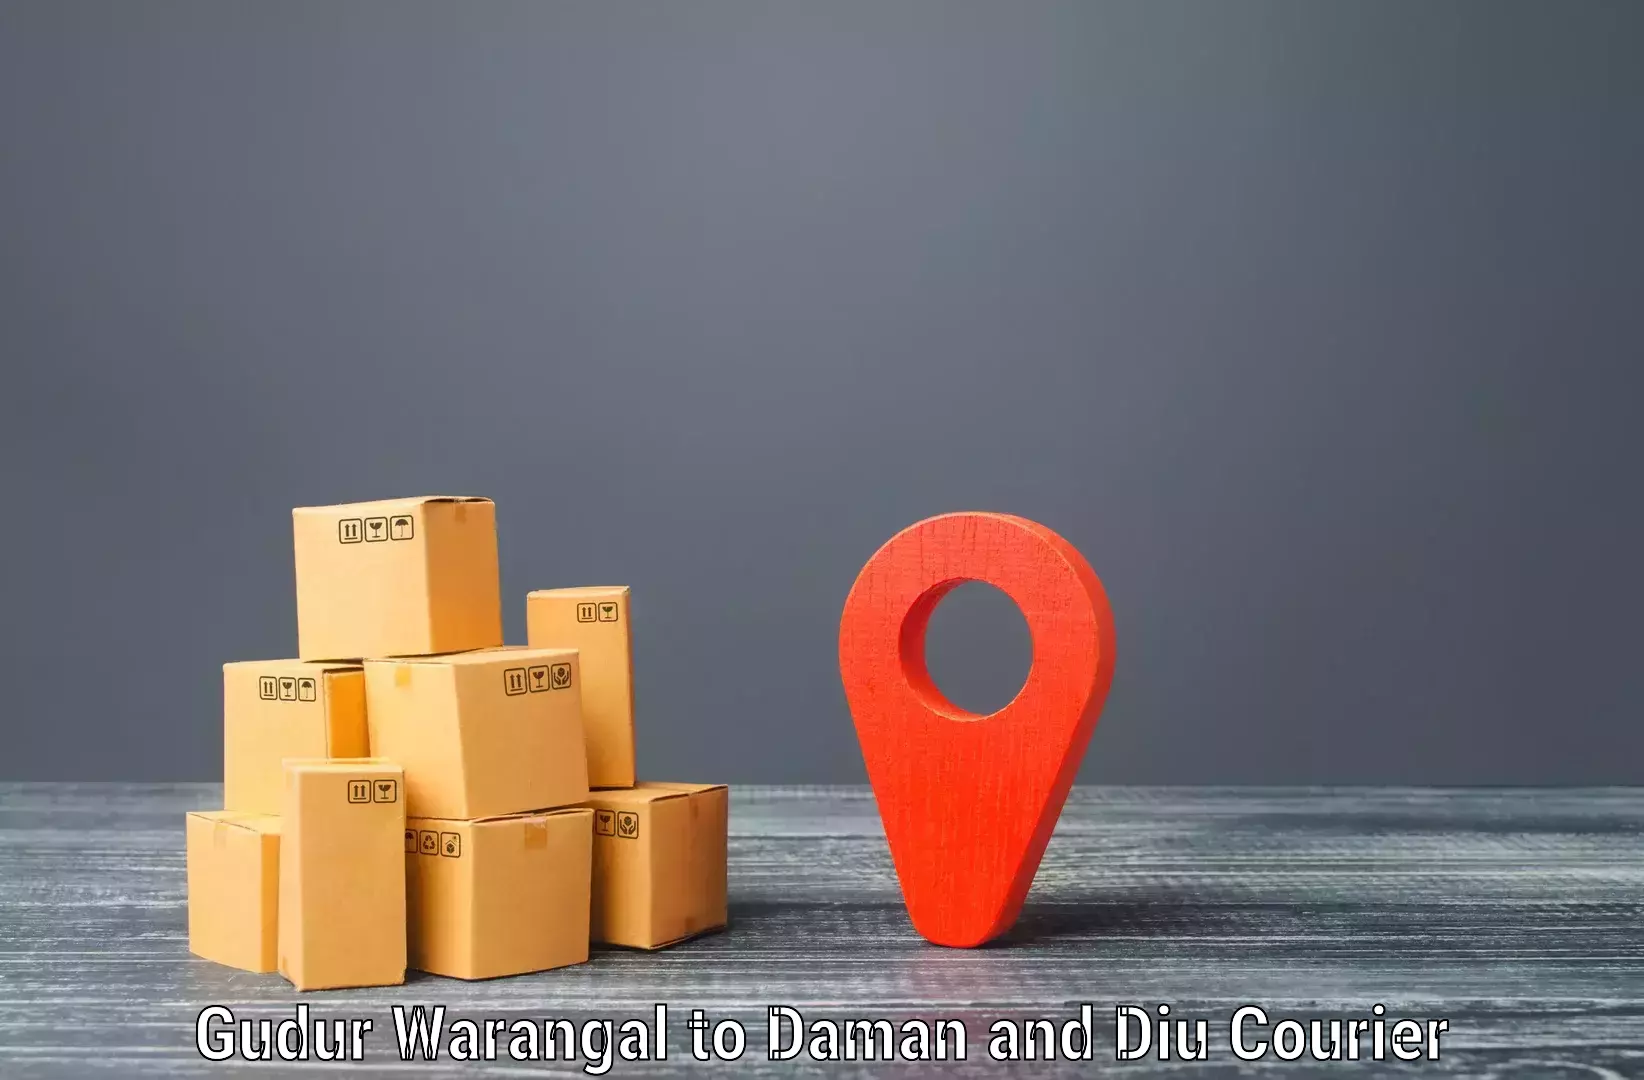 Innovative shipping solutions Gudur Warangal to Diu